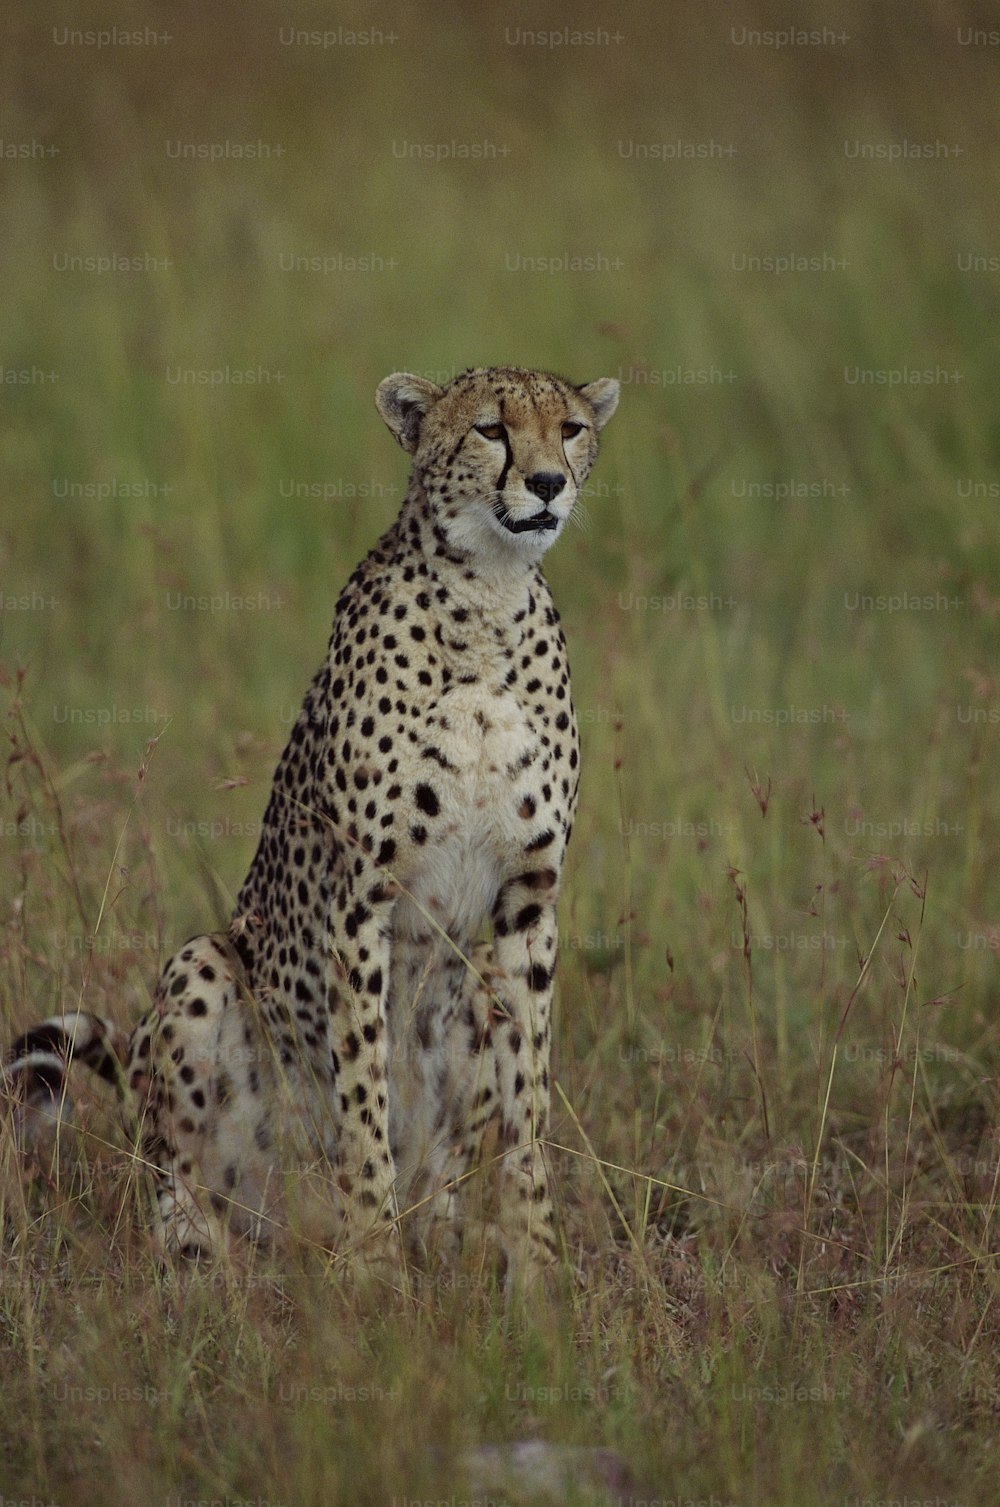 a cheetah sitting in a field of tall grass